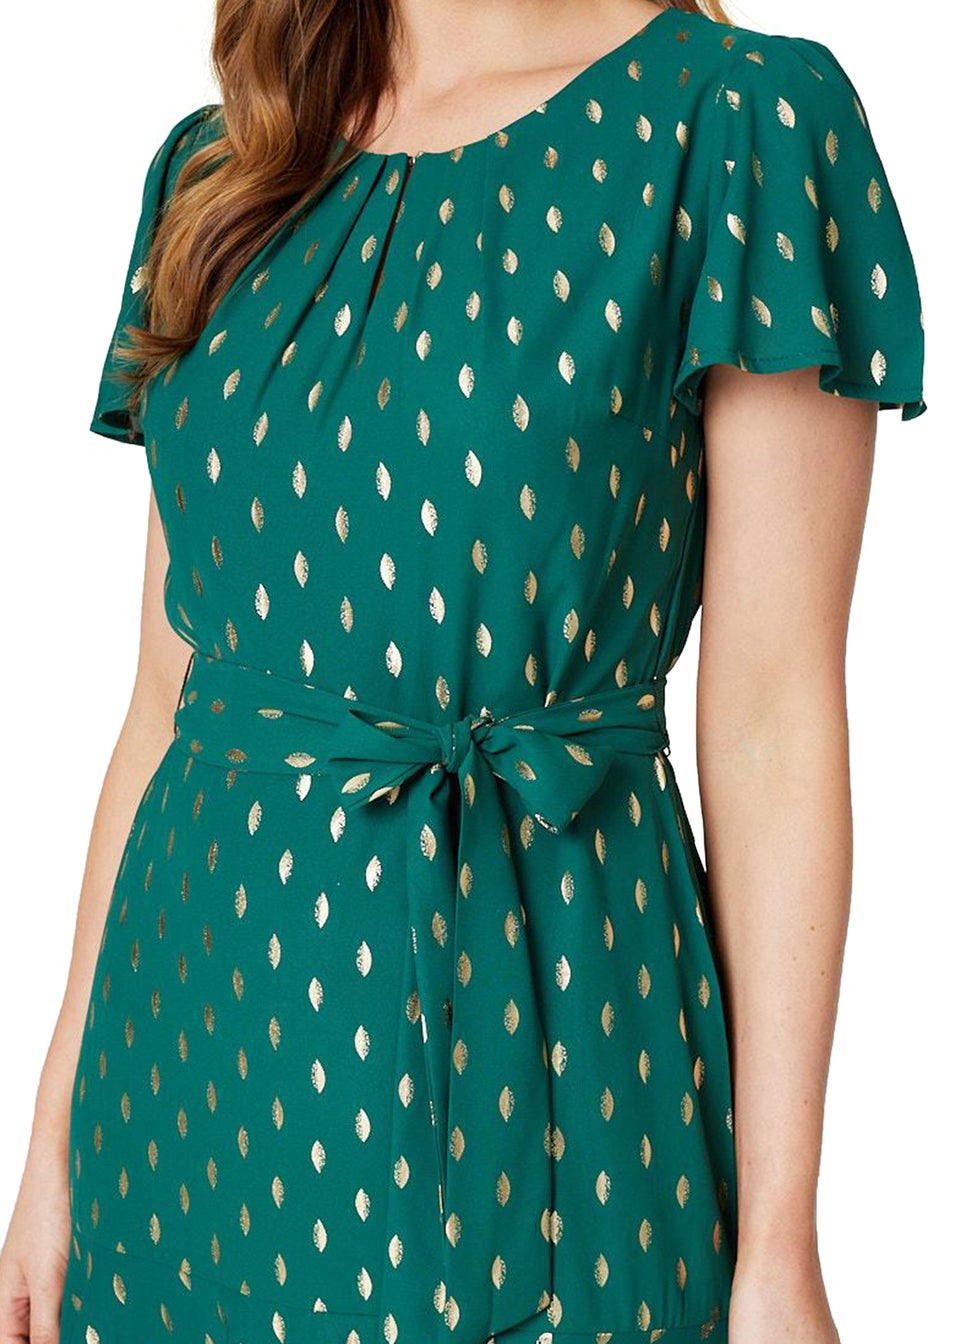 Izabel London Green Metallic Polka Dot Short Dress